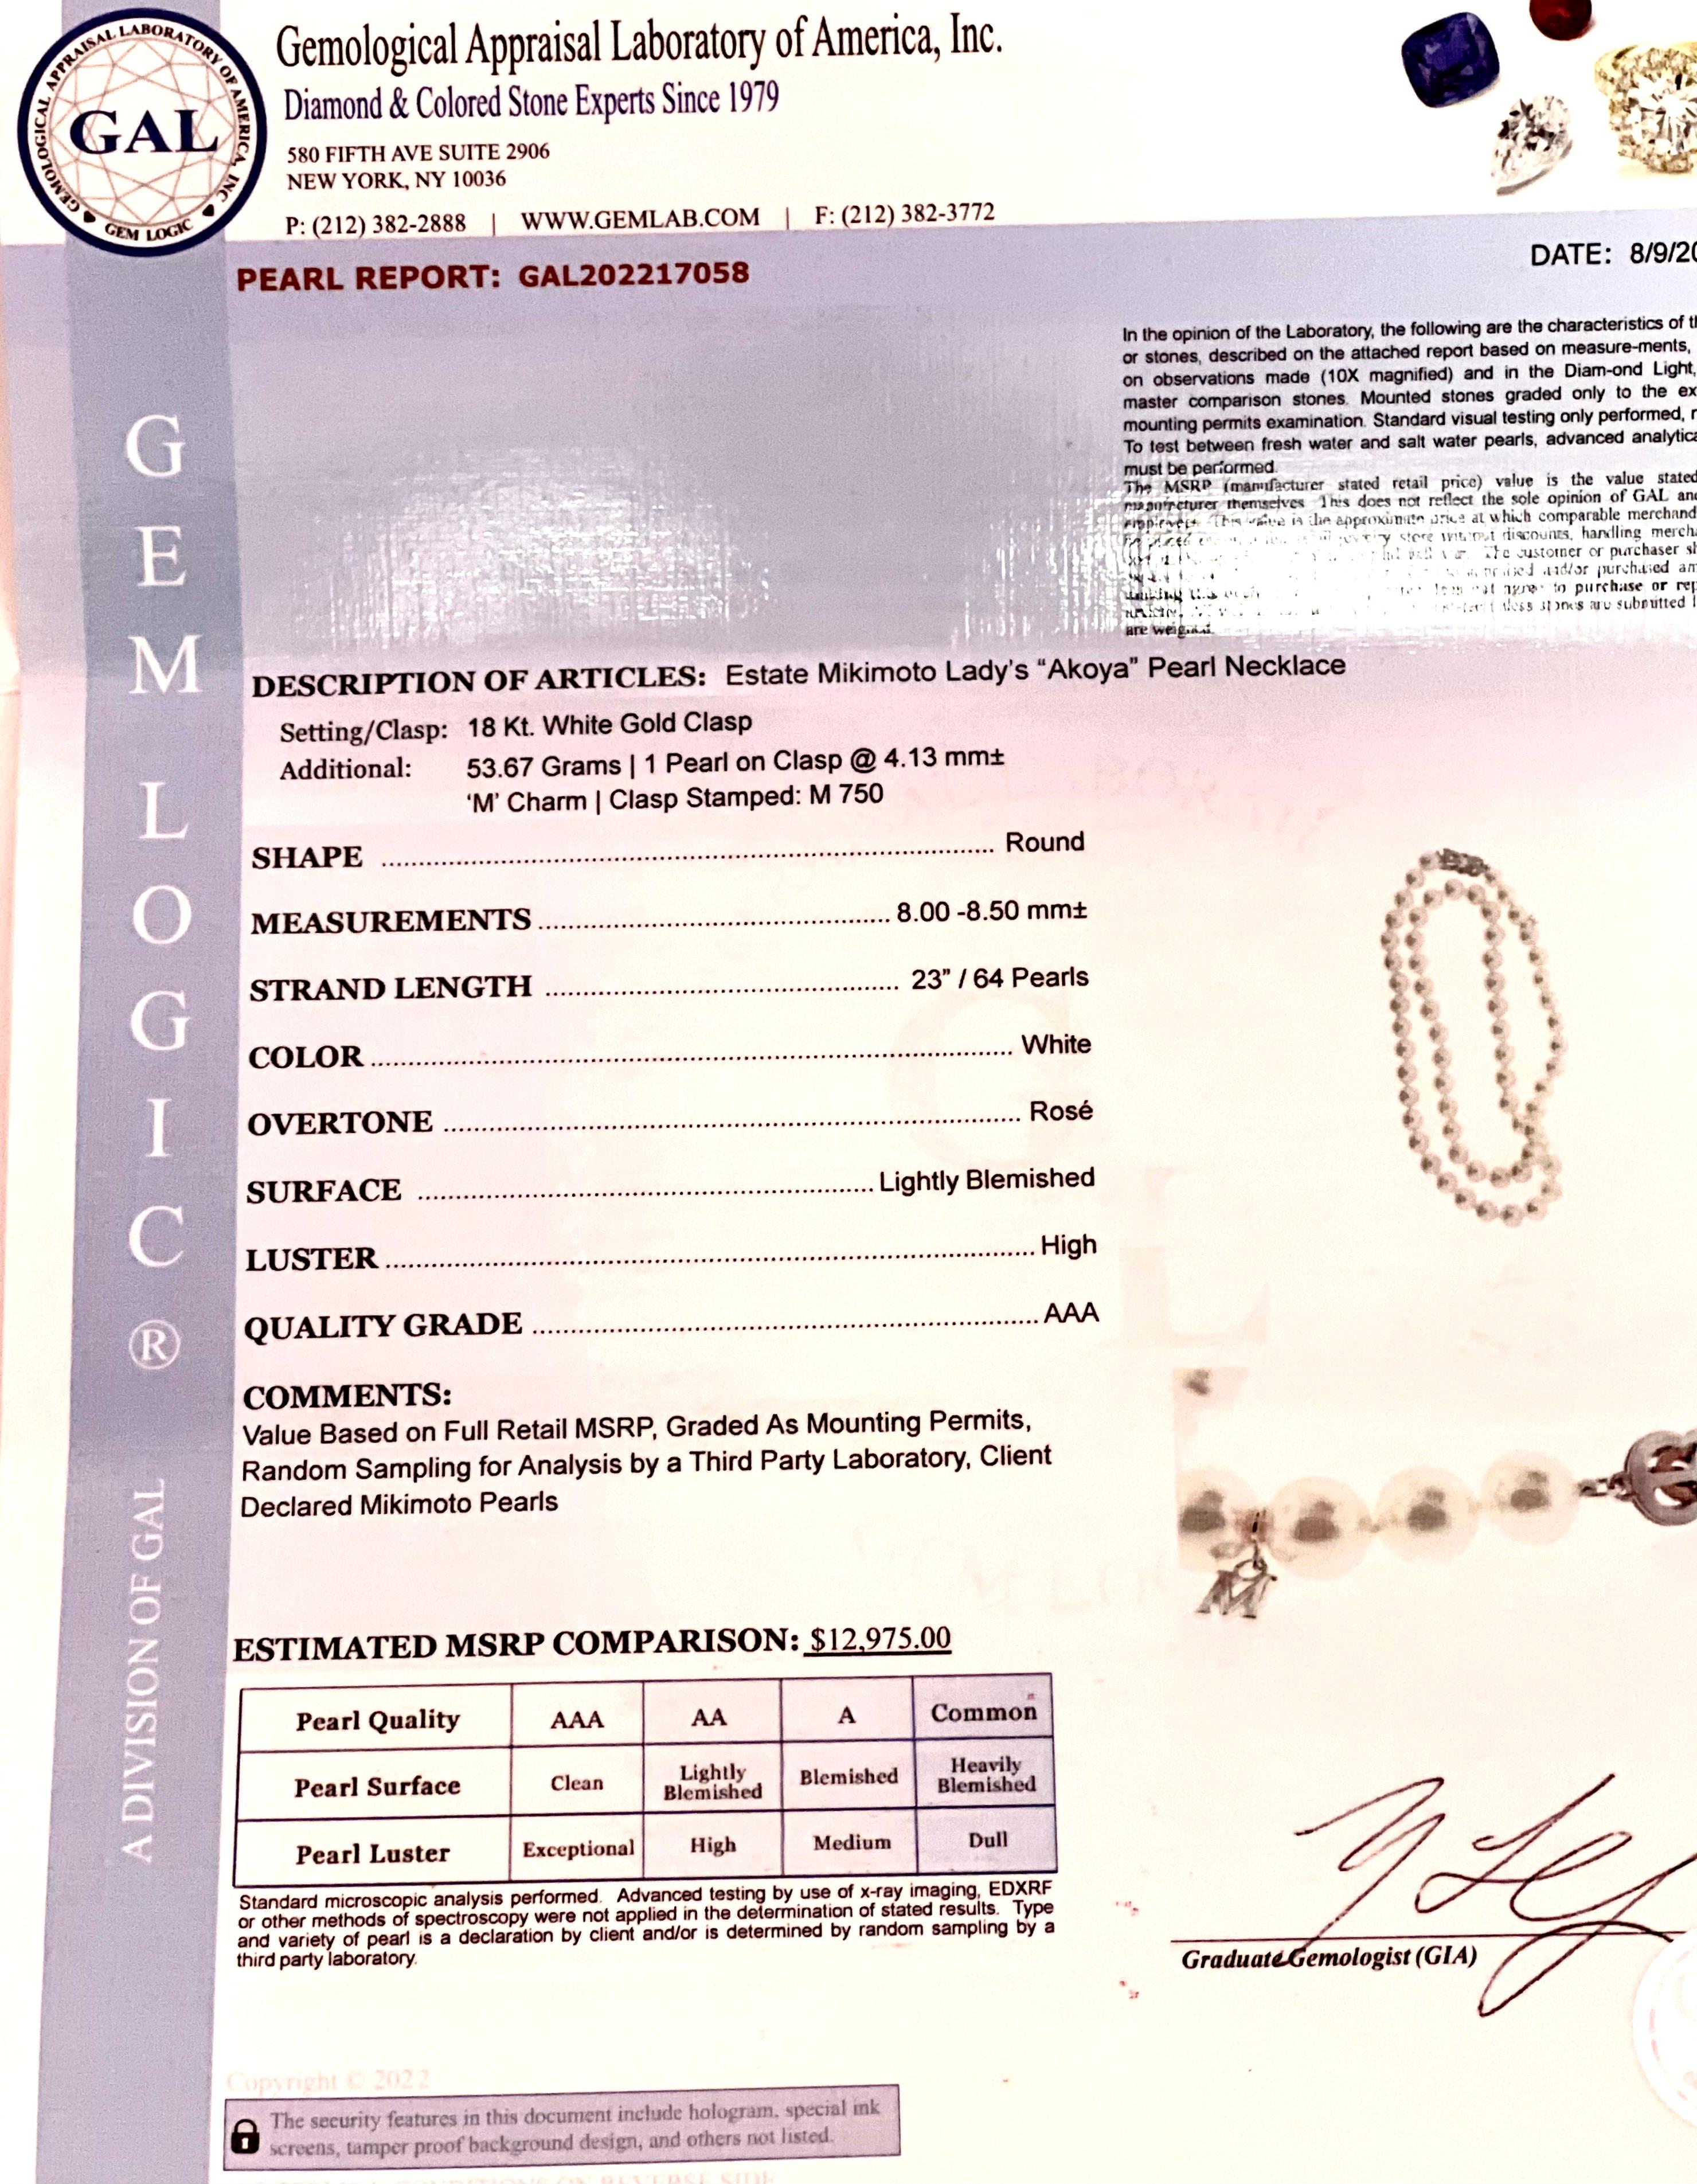 Mikimoto Estate Akoya Pearl Necklace 18k White Gold Certified 7